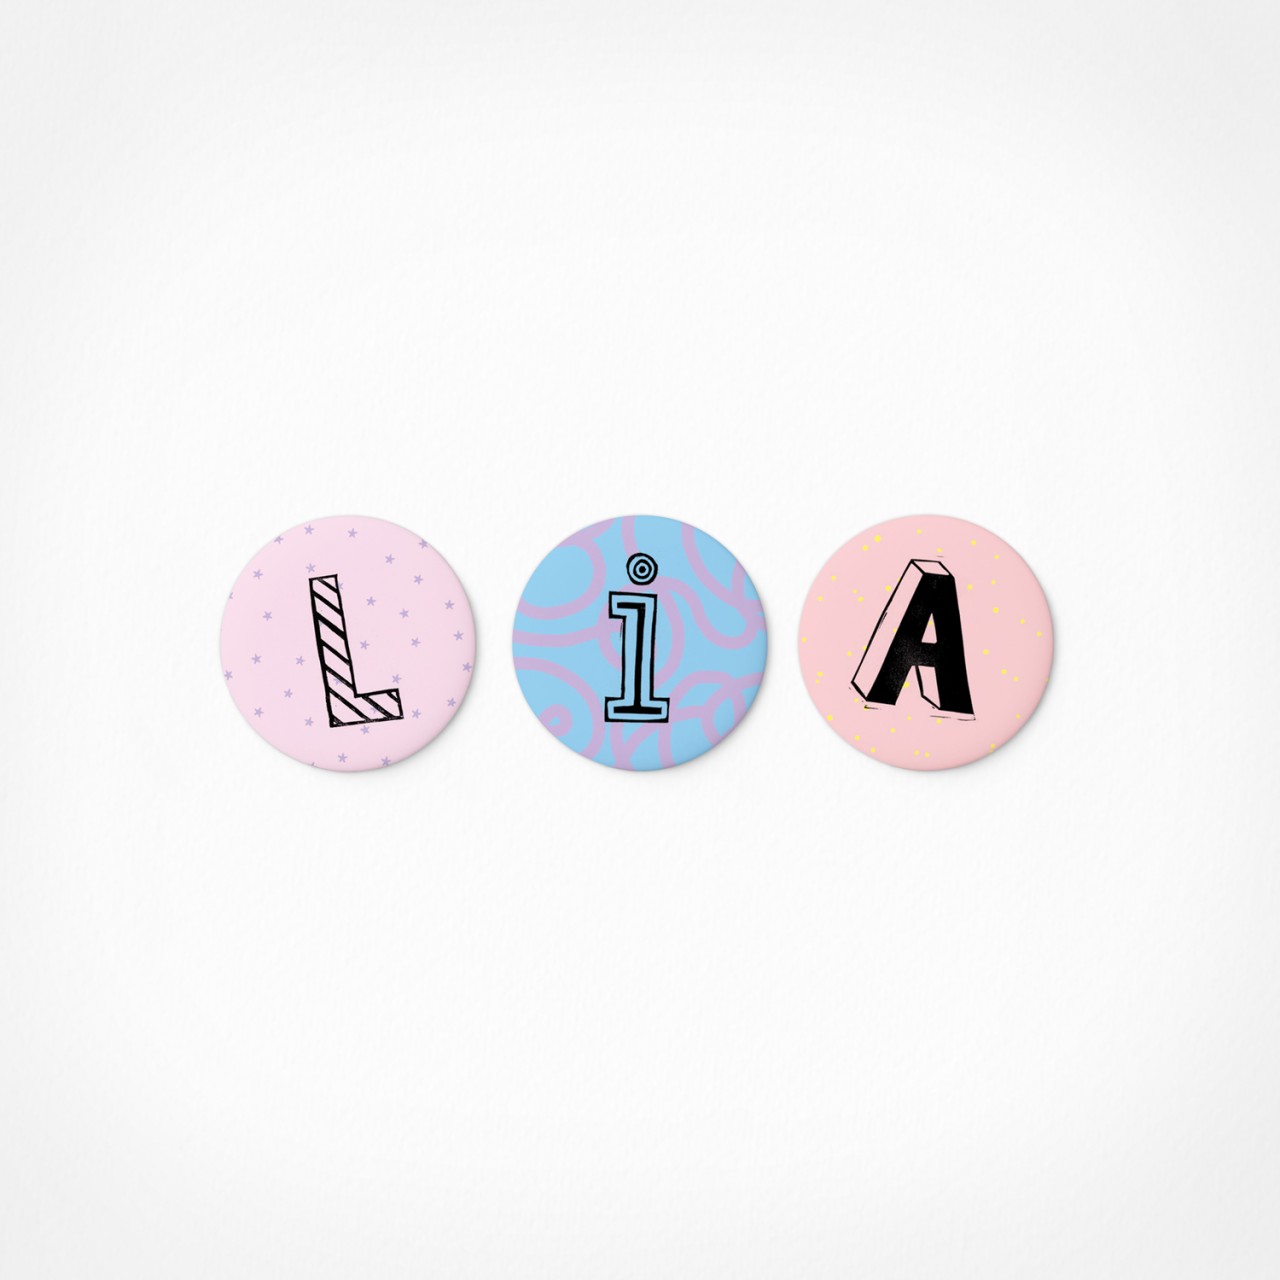 Lia | Magnetbuchstaben Set | 3 Magnete